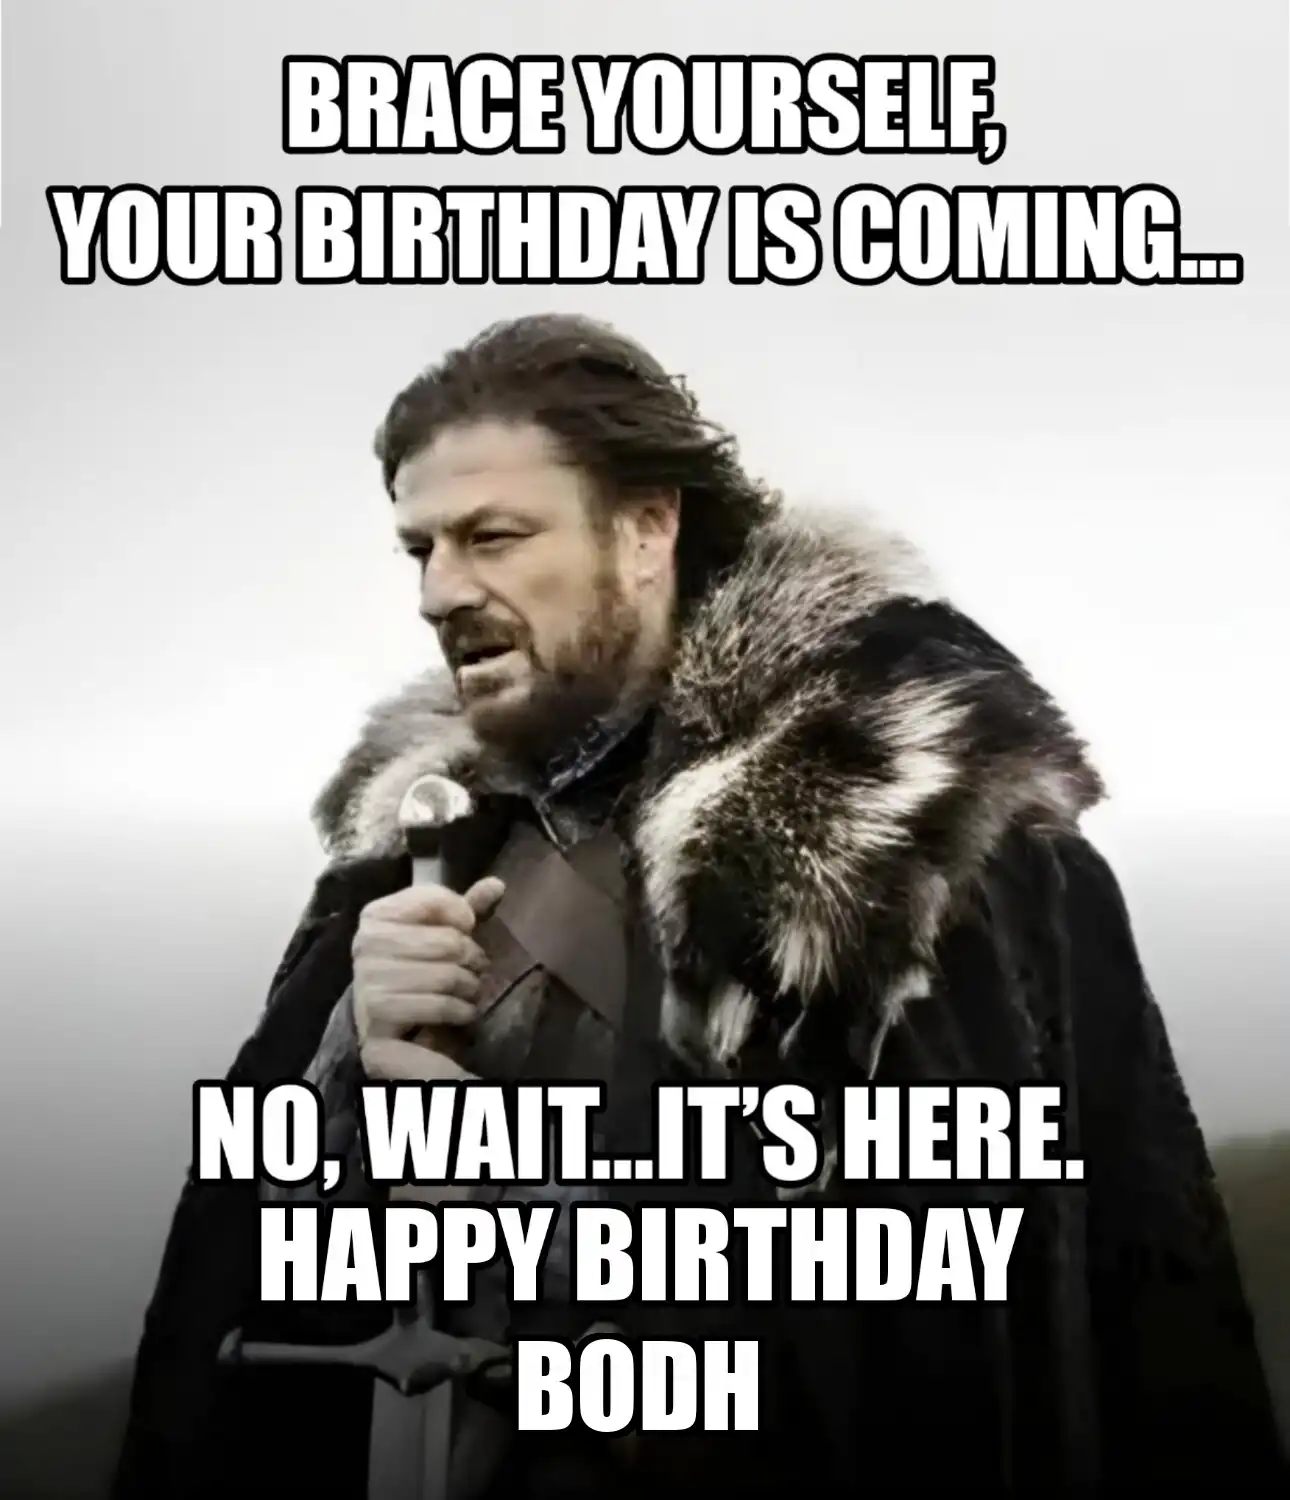 Happy Birthday Bodh Brace Yourself Your Birthday Is Coming Meme